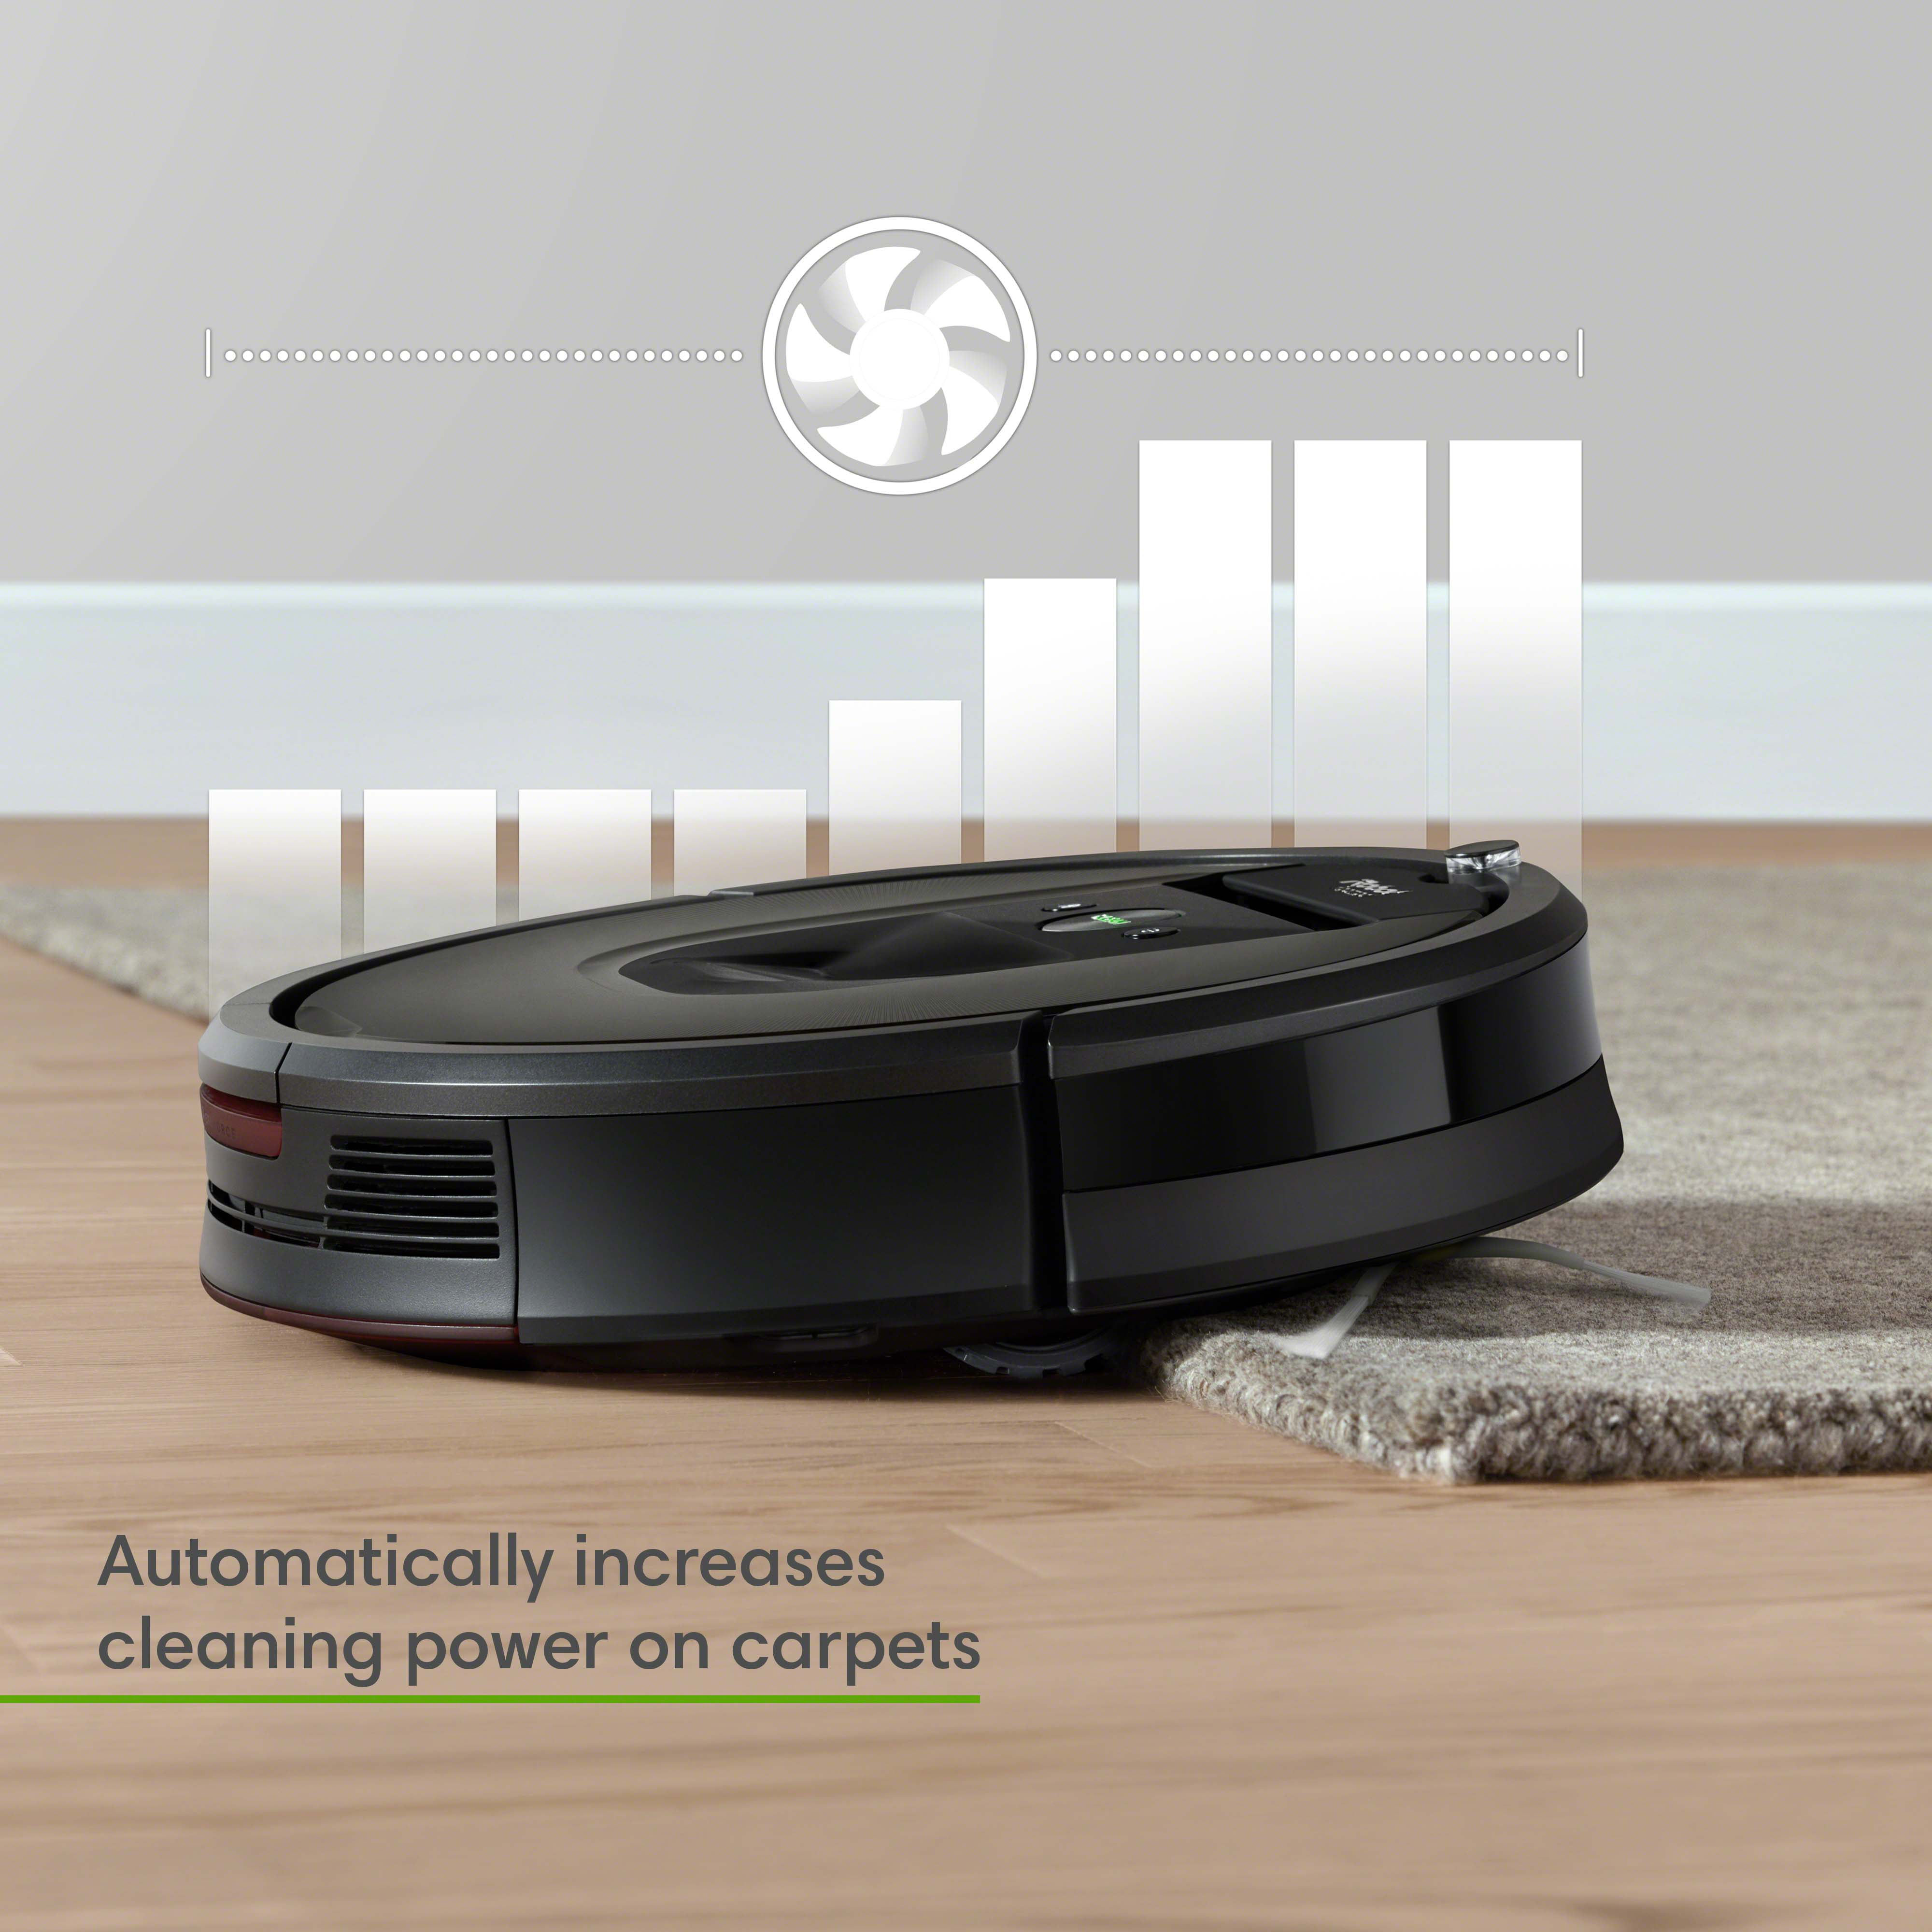 Forbindelse profil billetpris Restored iRobot Roomba 980 Wi-Fi Connected Robot Vacuum (Refurbished) -  Walmart.com